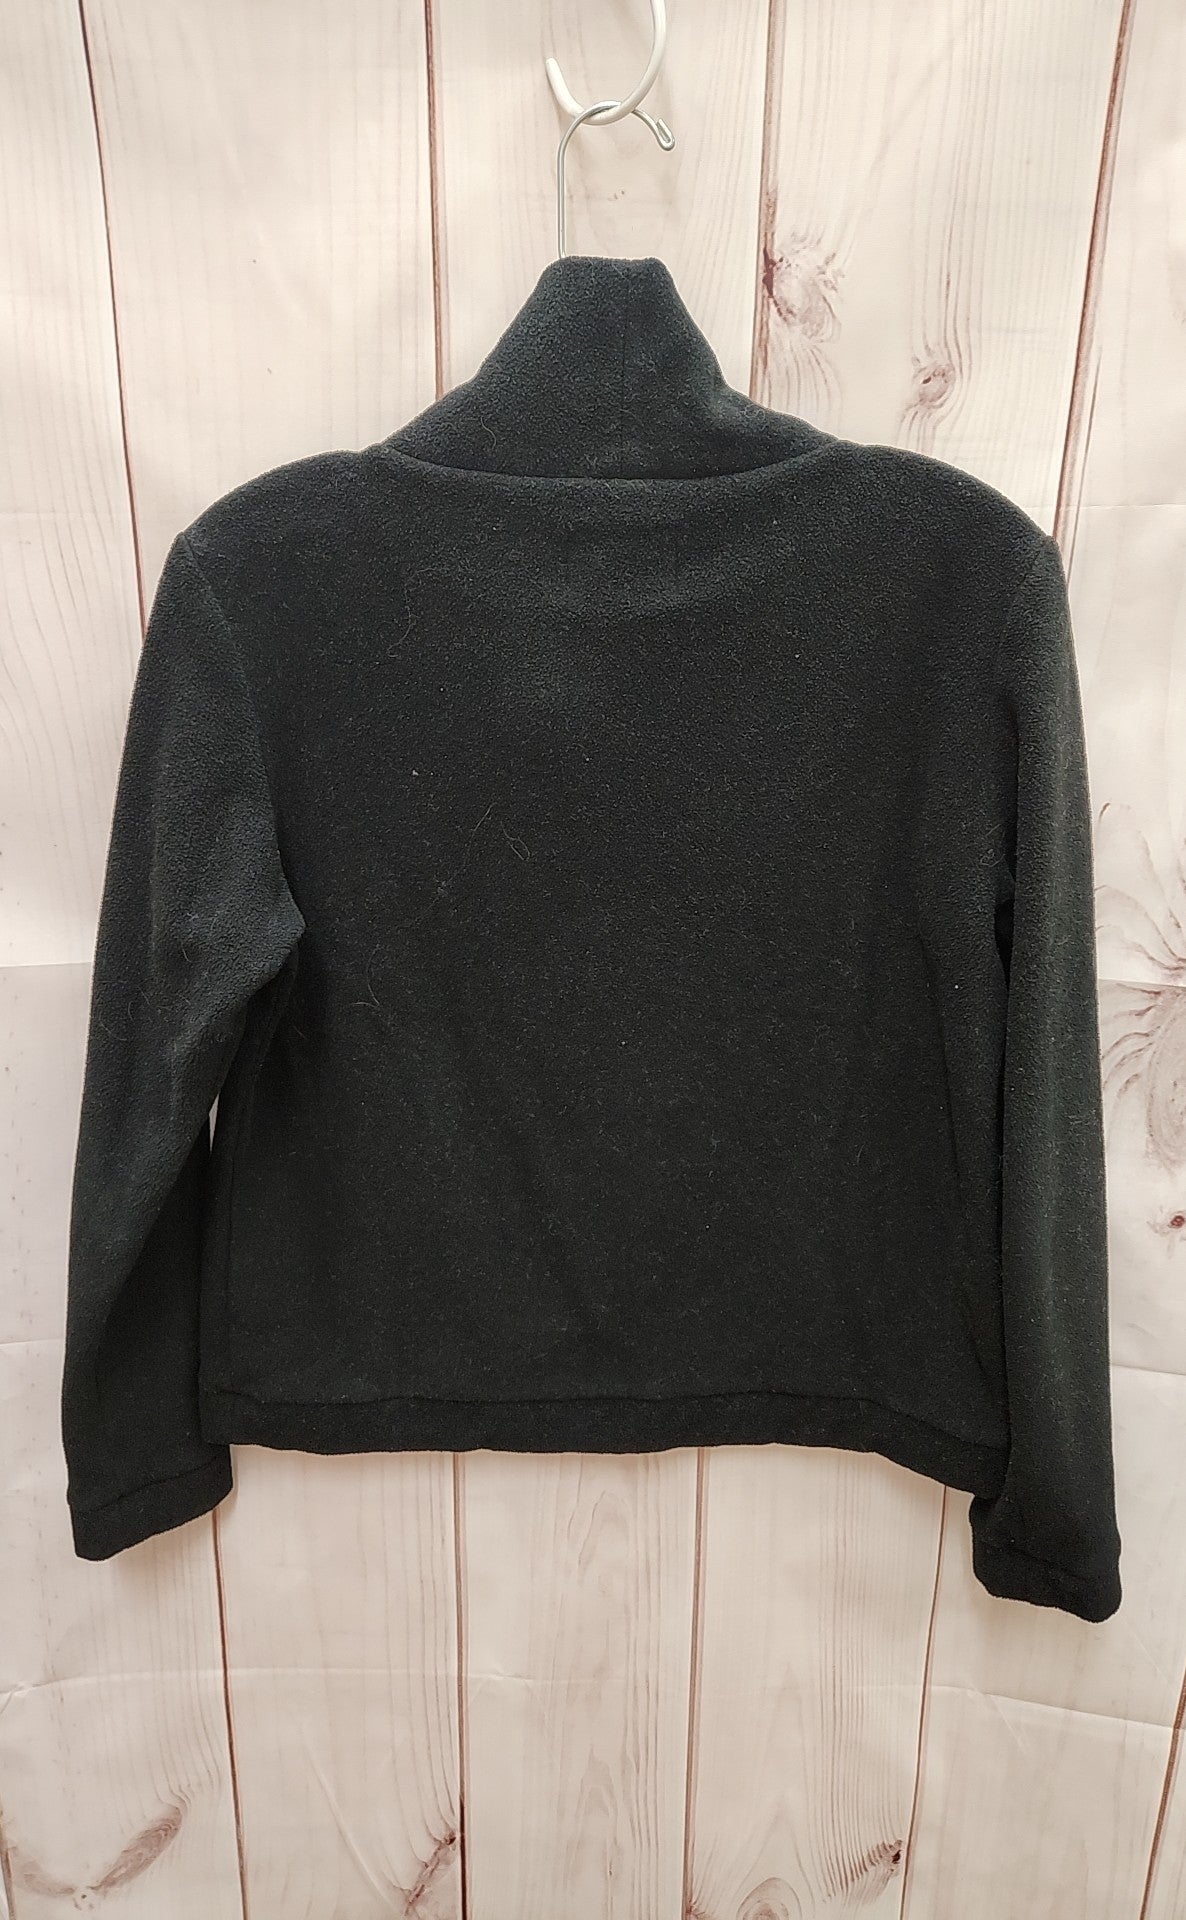 Dudley Stephens Women's Size M Black Sweatshirt